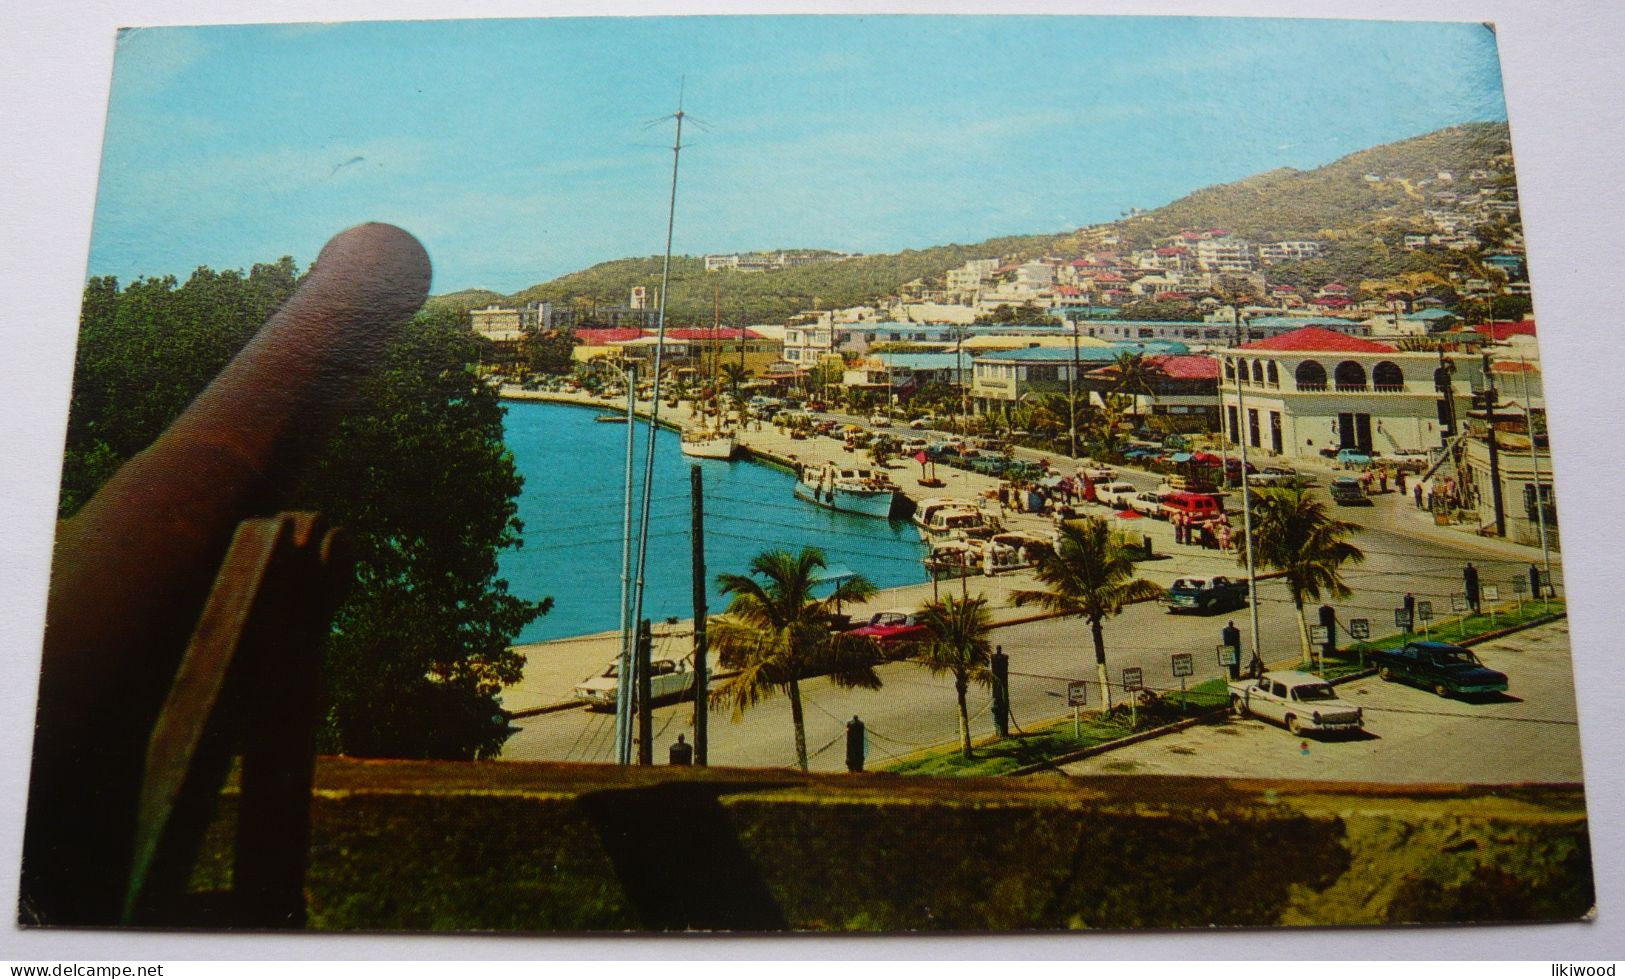 St.Thomas - Virgin Islands - Waterfront As Seen From Fort Christiansvaern - Jungferninseln, Amerik.